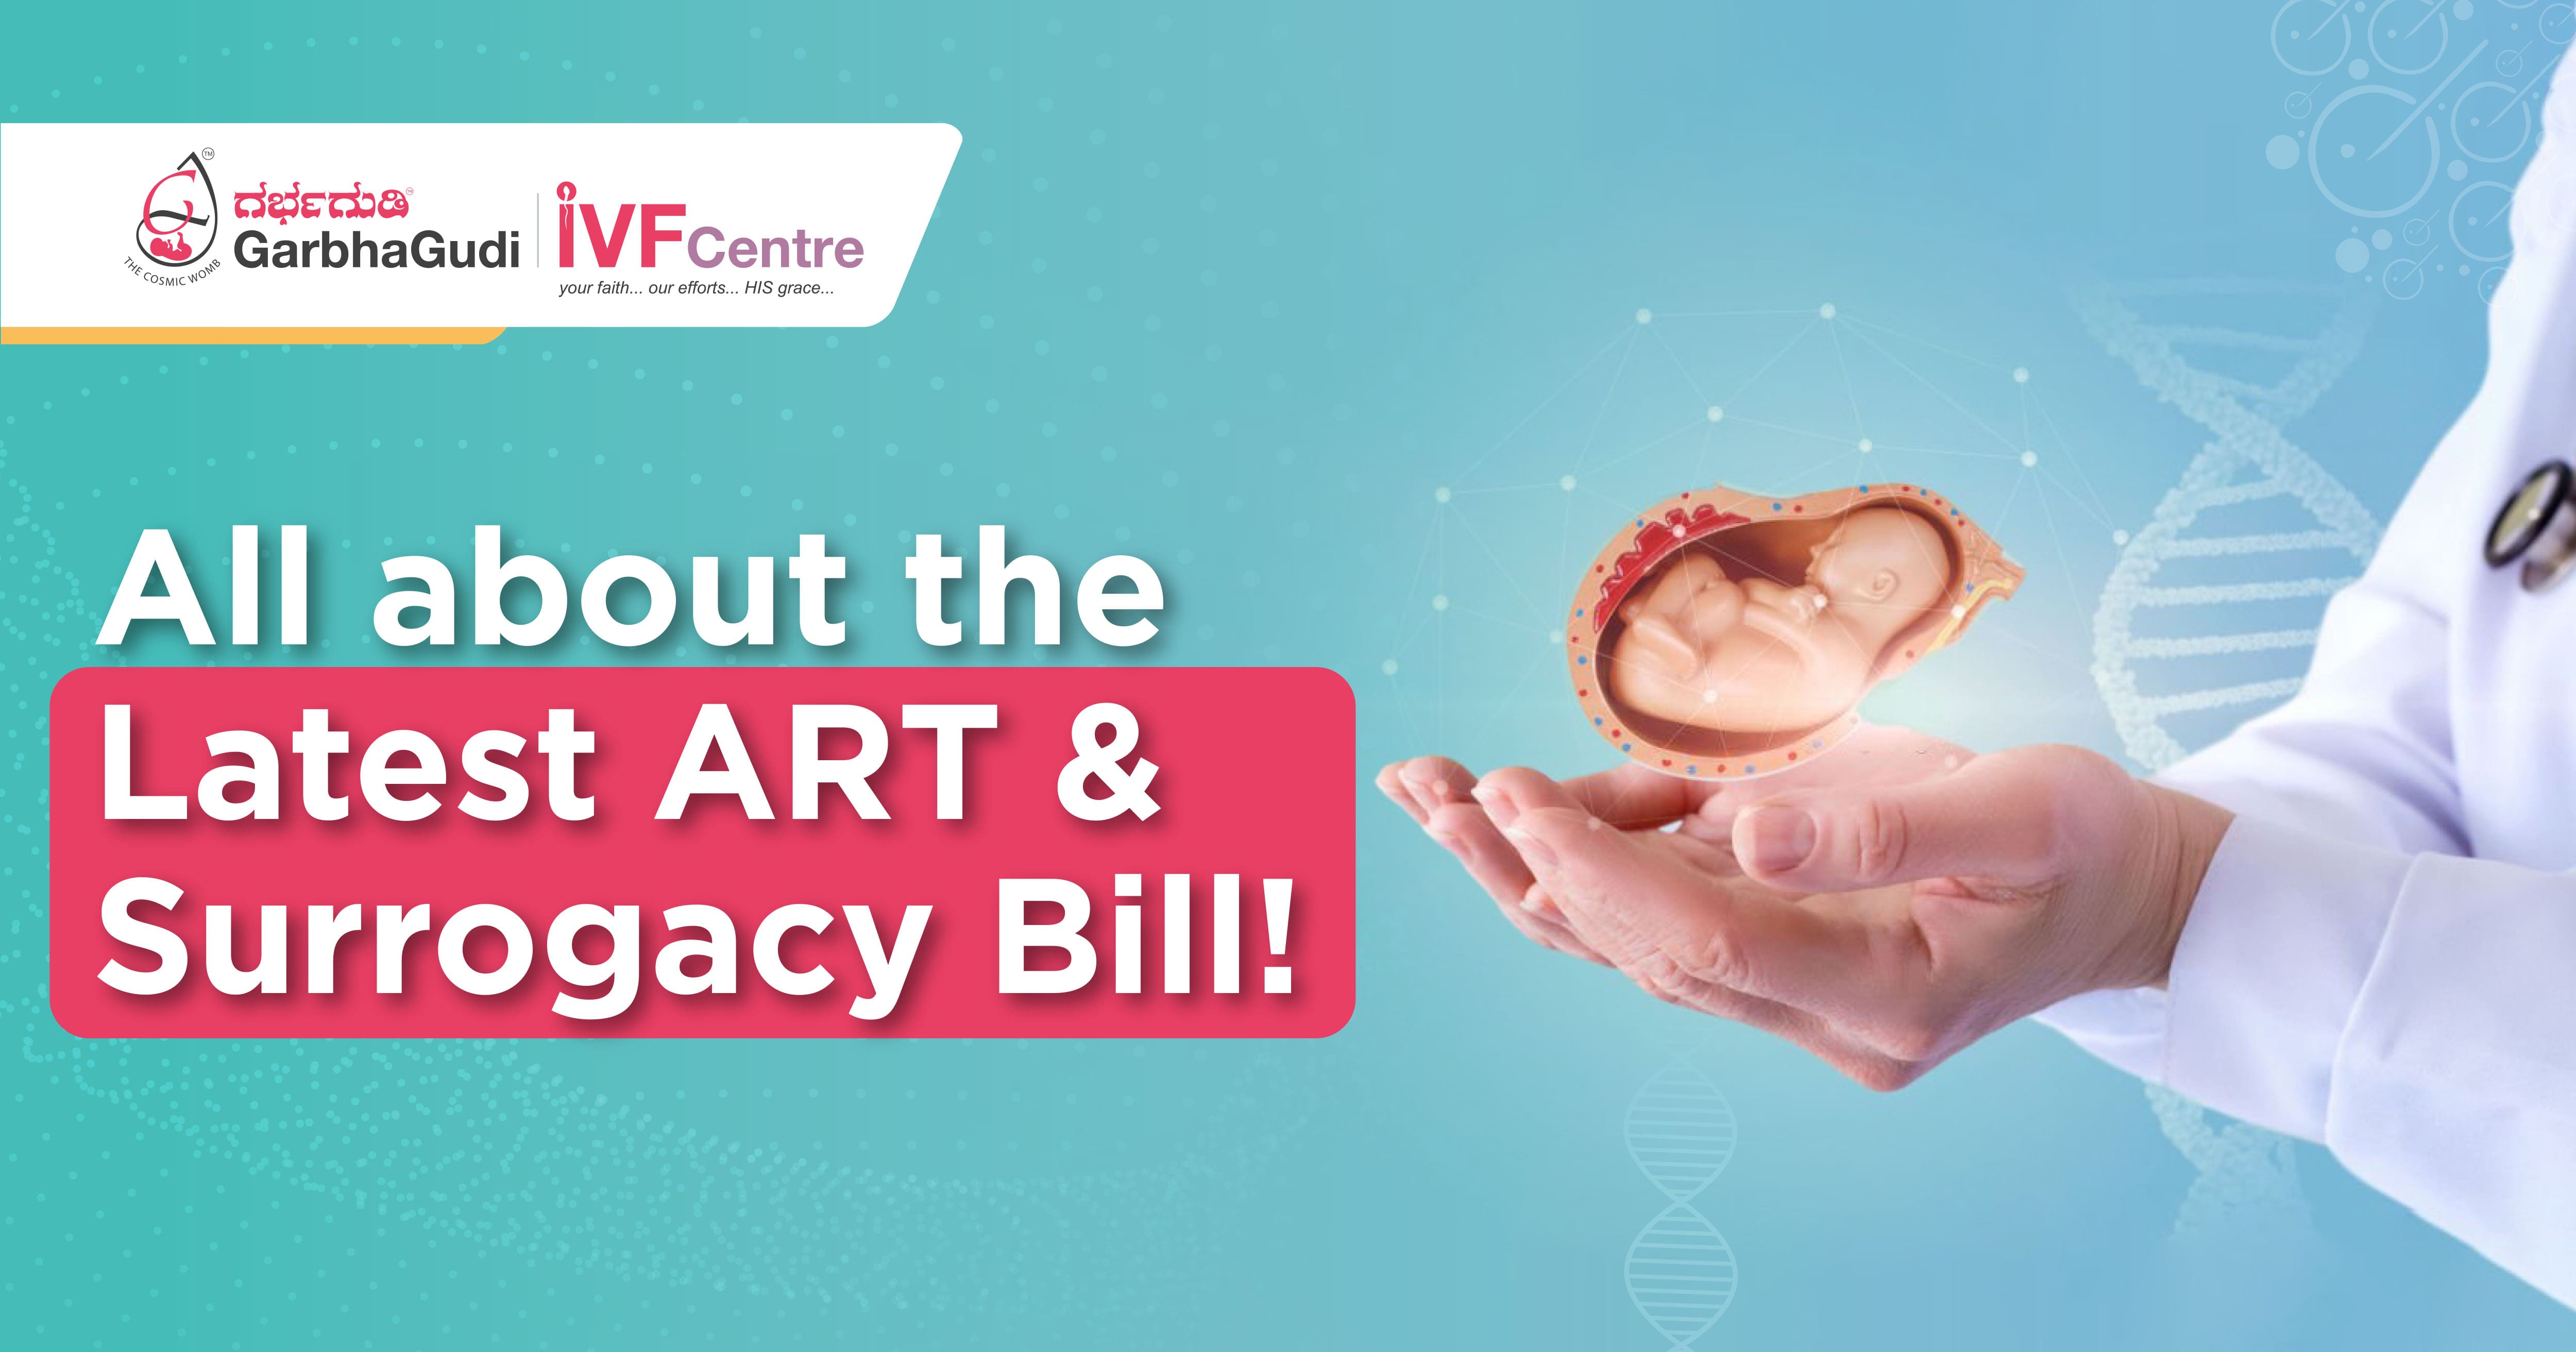 All about the latest ART & Surrogacy Bill! GarbhaGudi IVF Centre